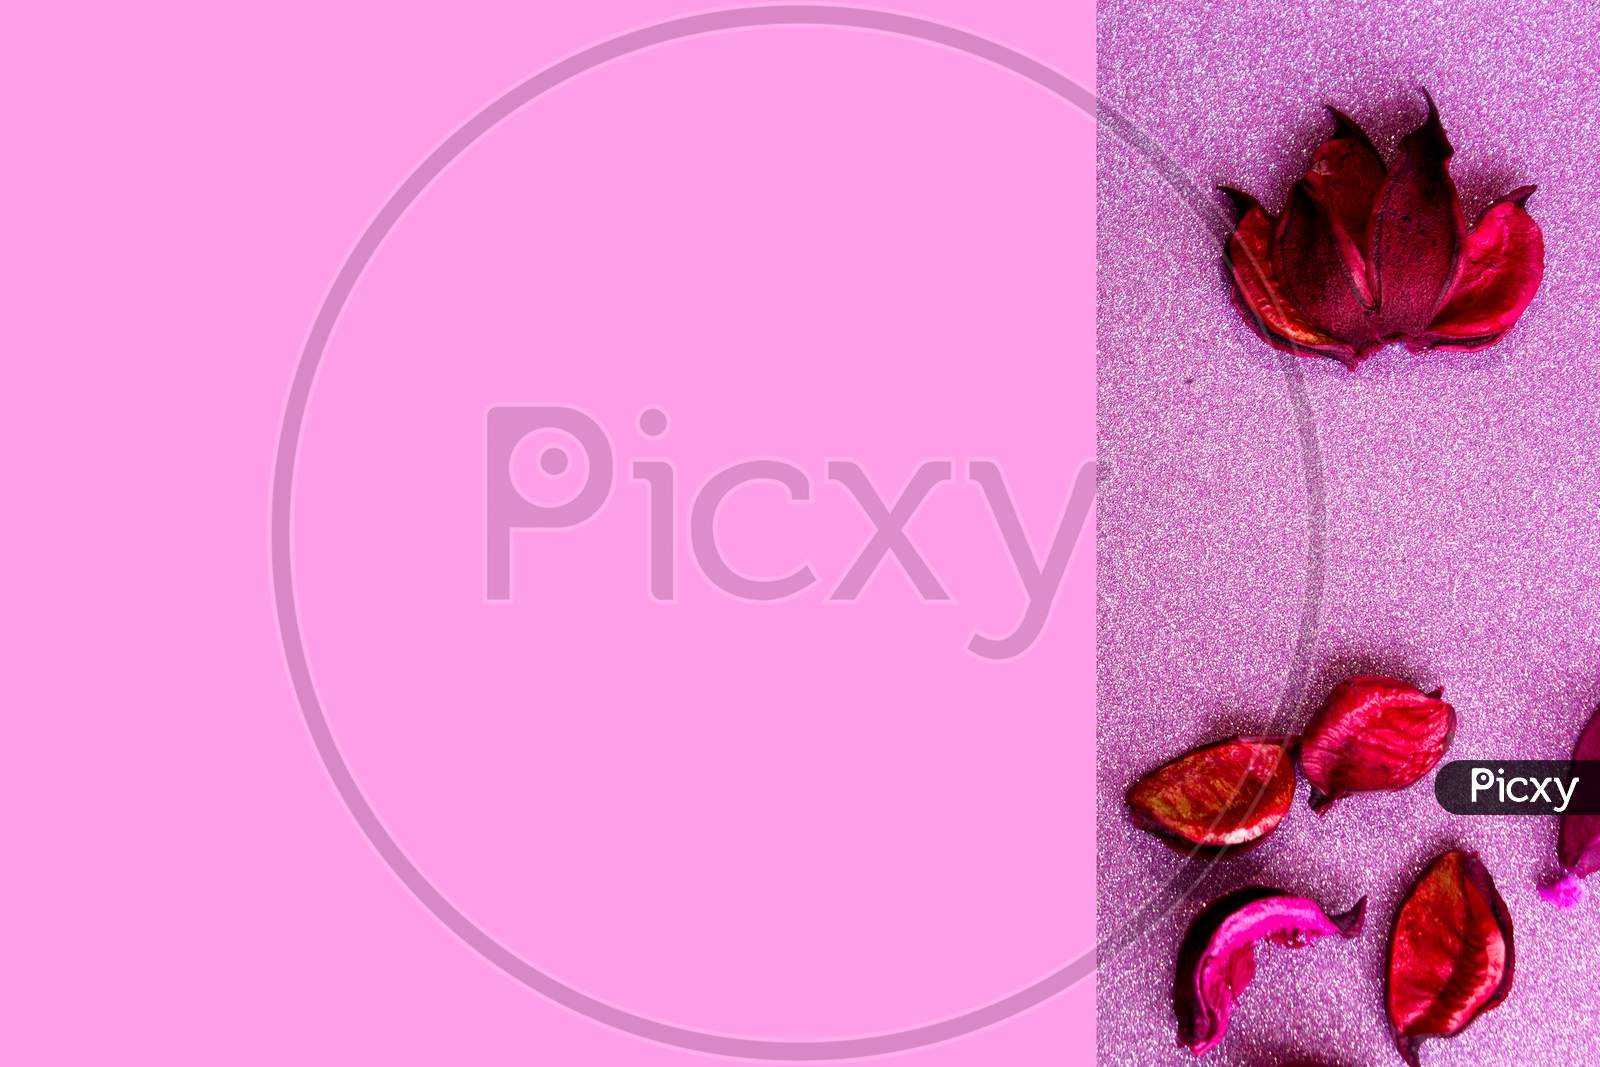 Flower Petals on Pink Background